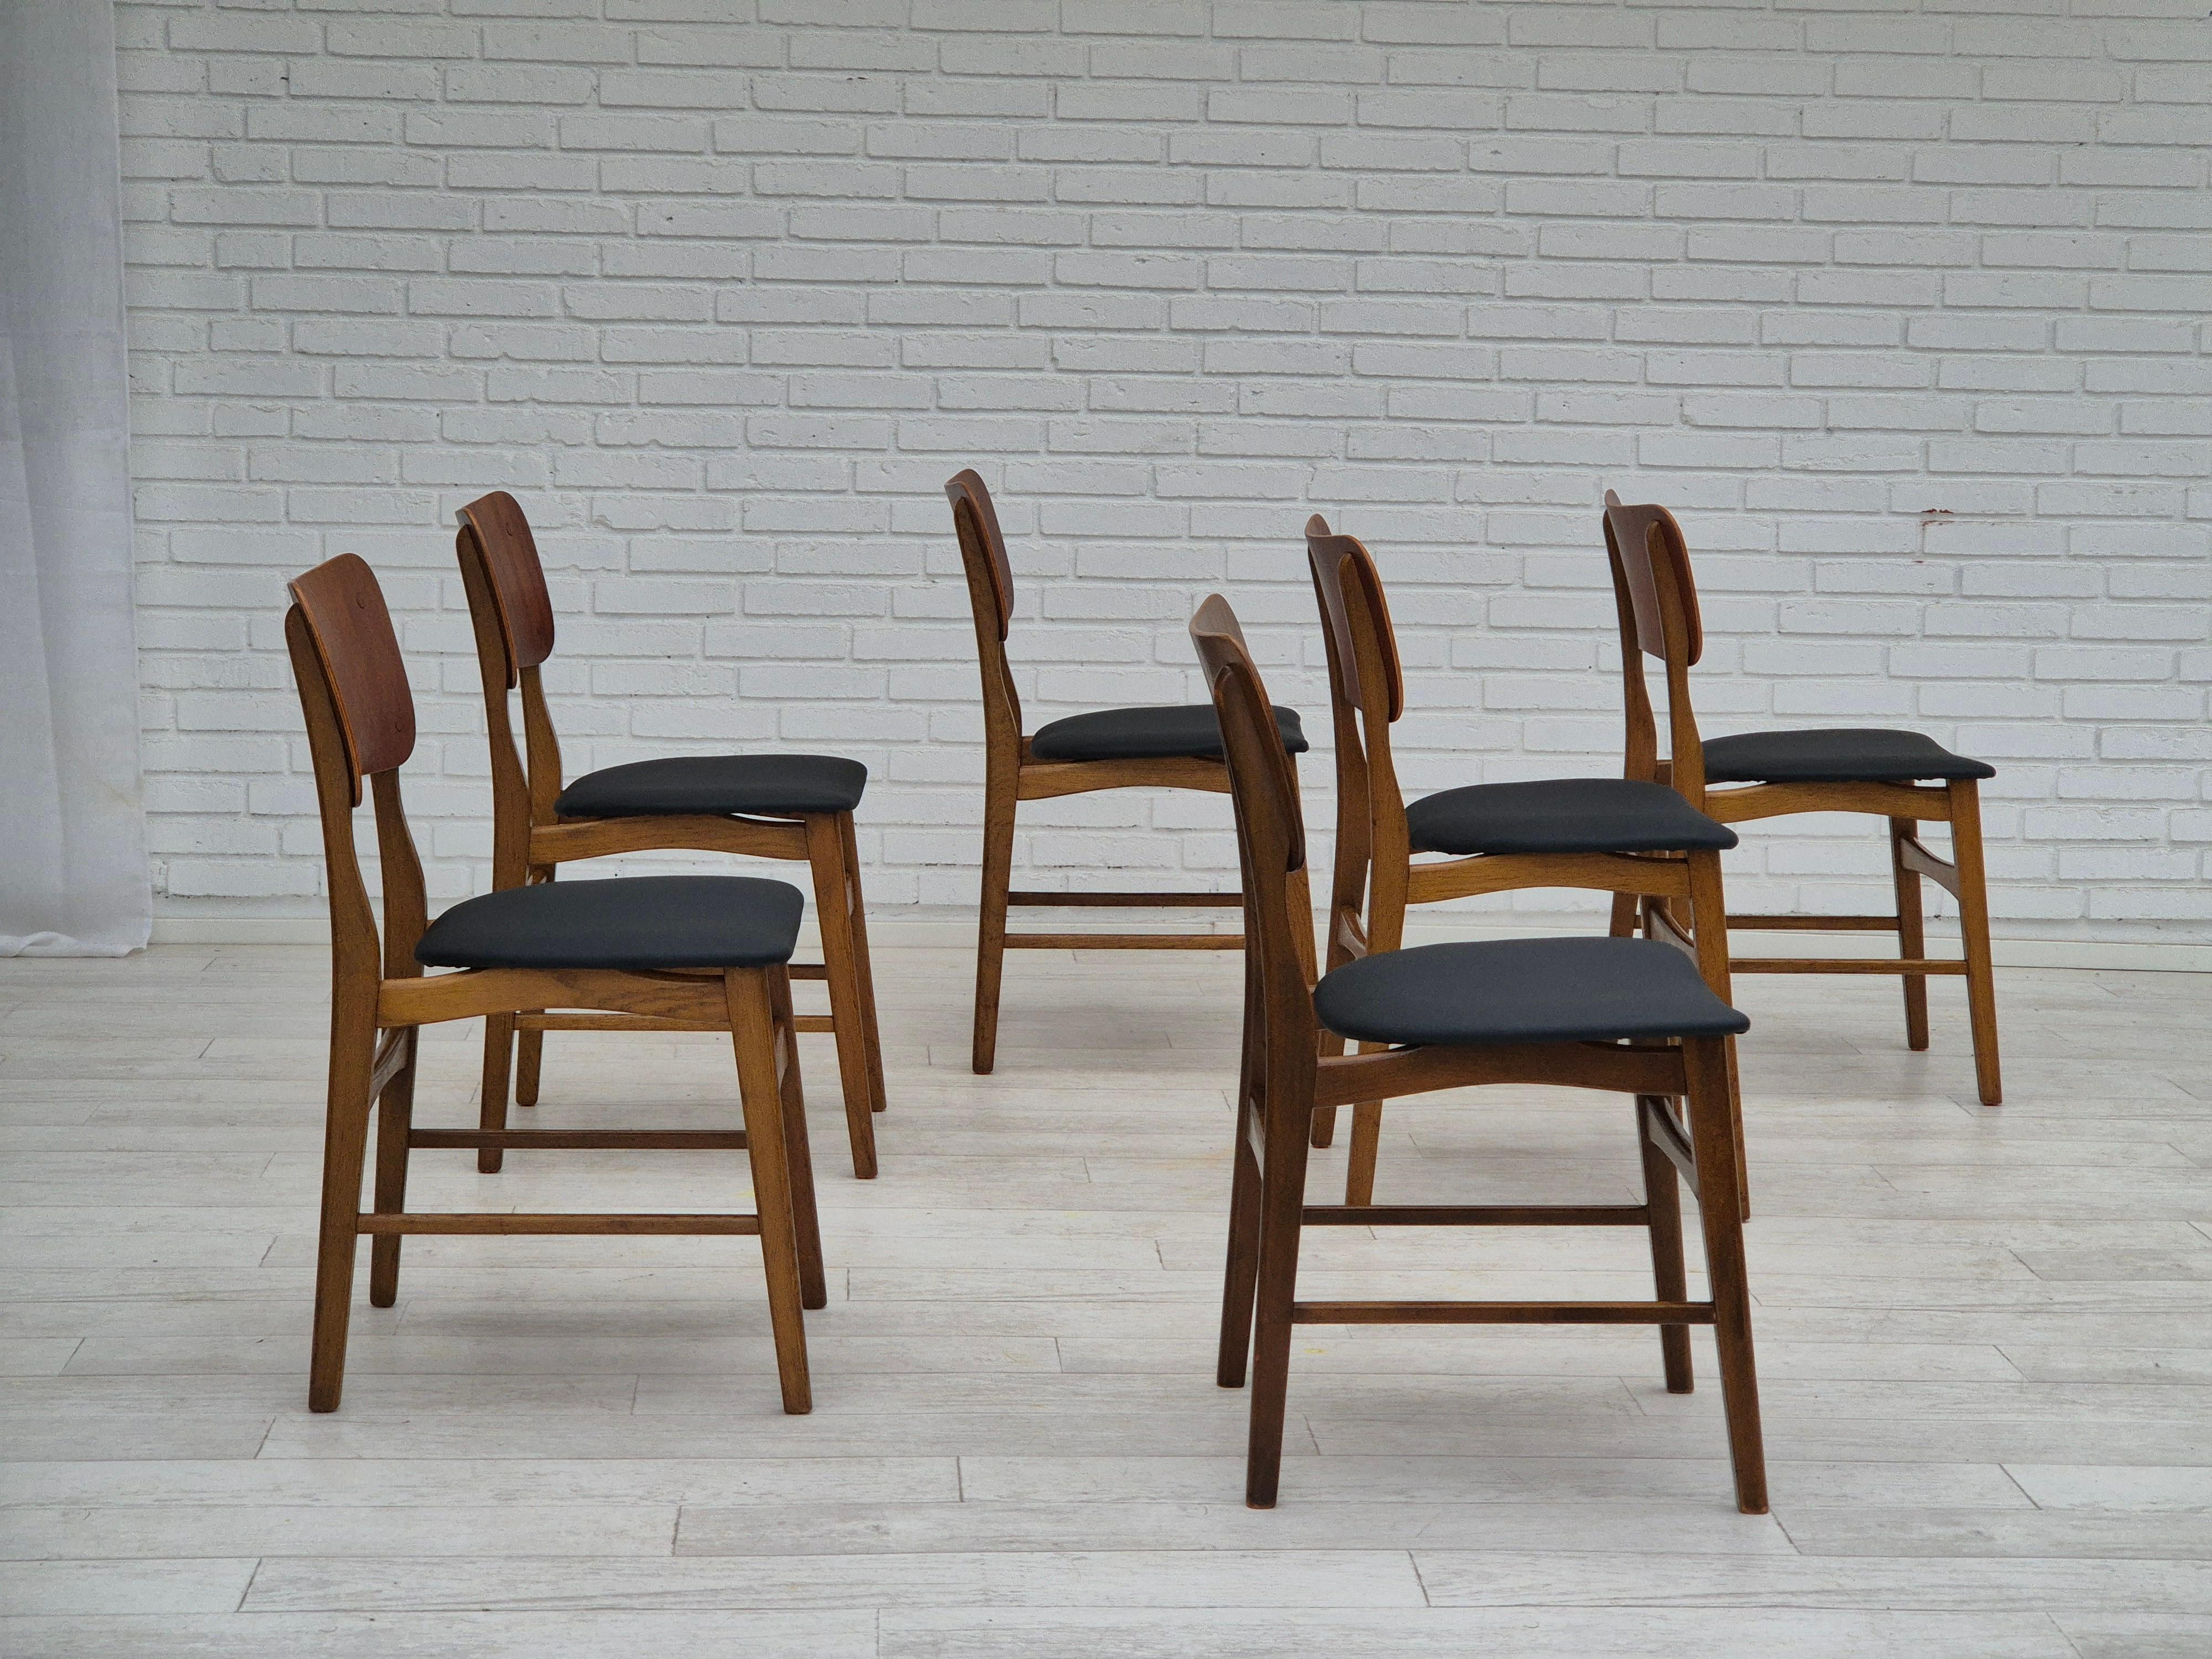 Scandinavian Modern 1960s, Danish design by Ib Kofod Larsen, Christensen & Larsen, set of chairs.